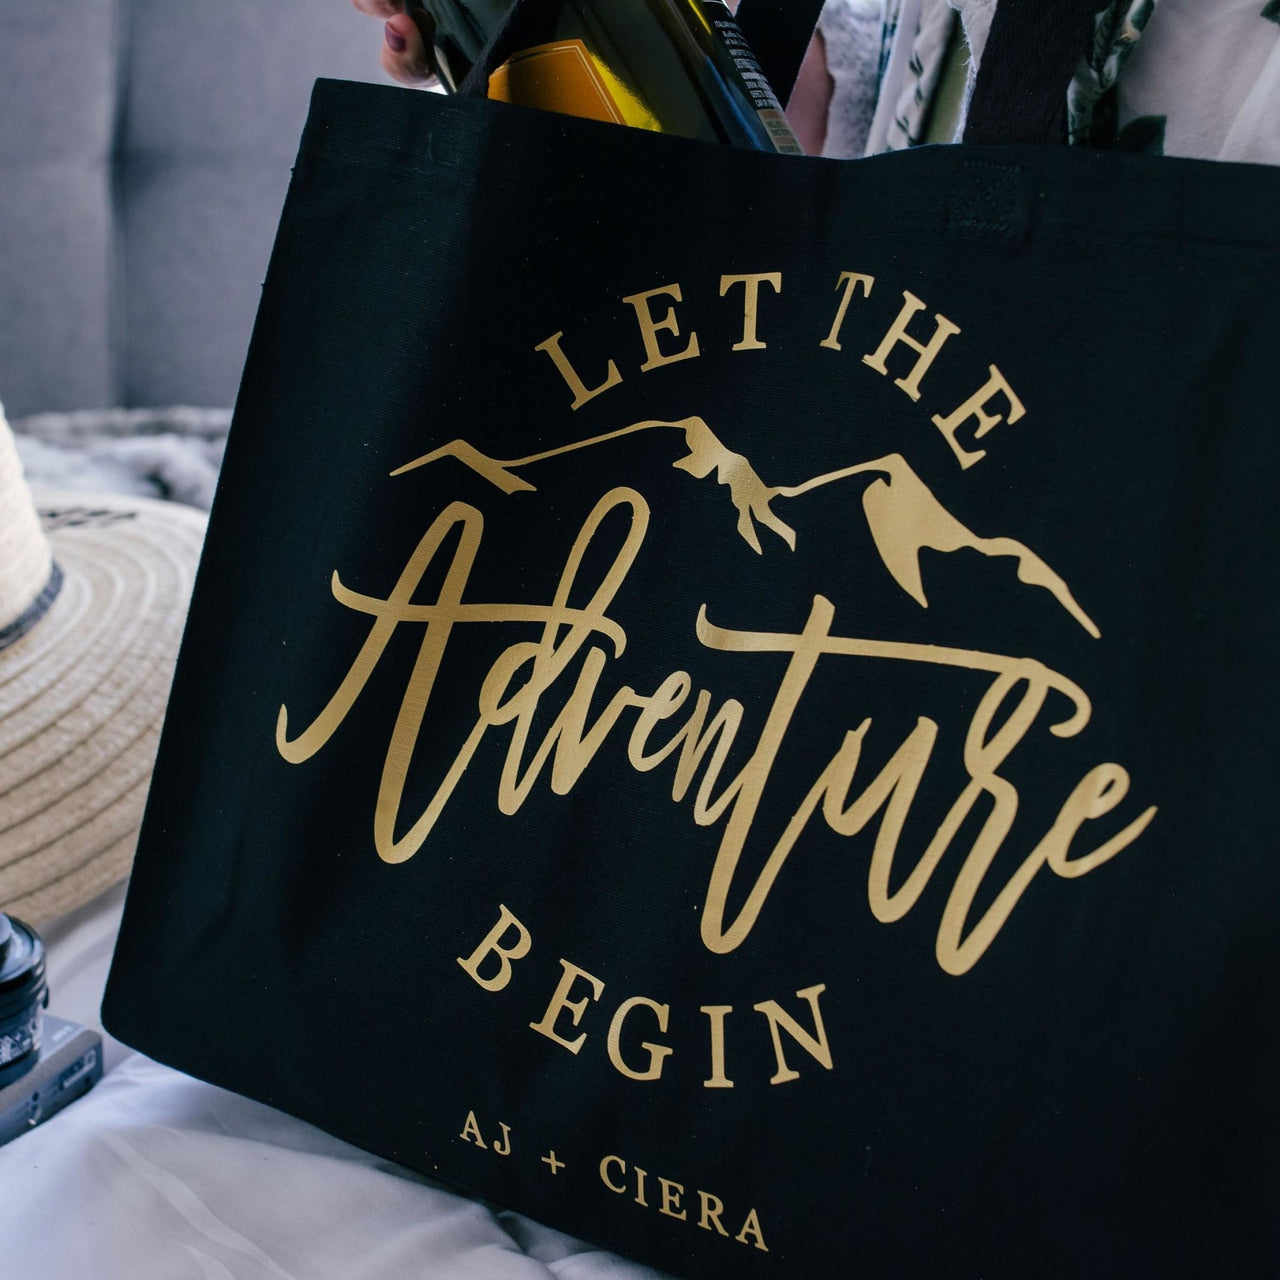 Let The Adventure Begin Canvas Tote Bag - Rich Design Co